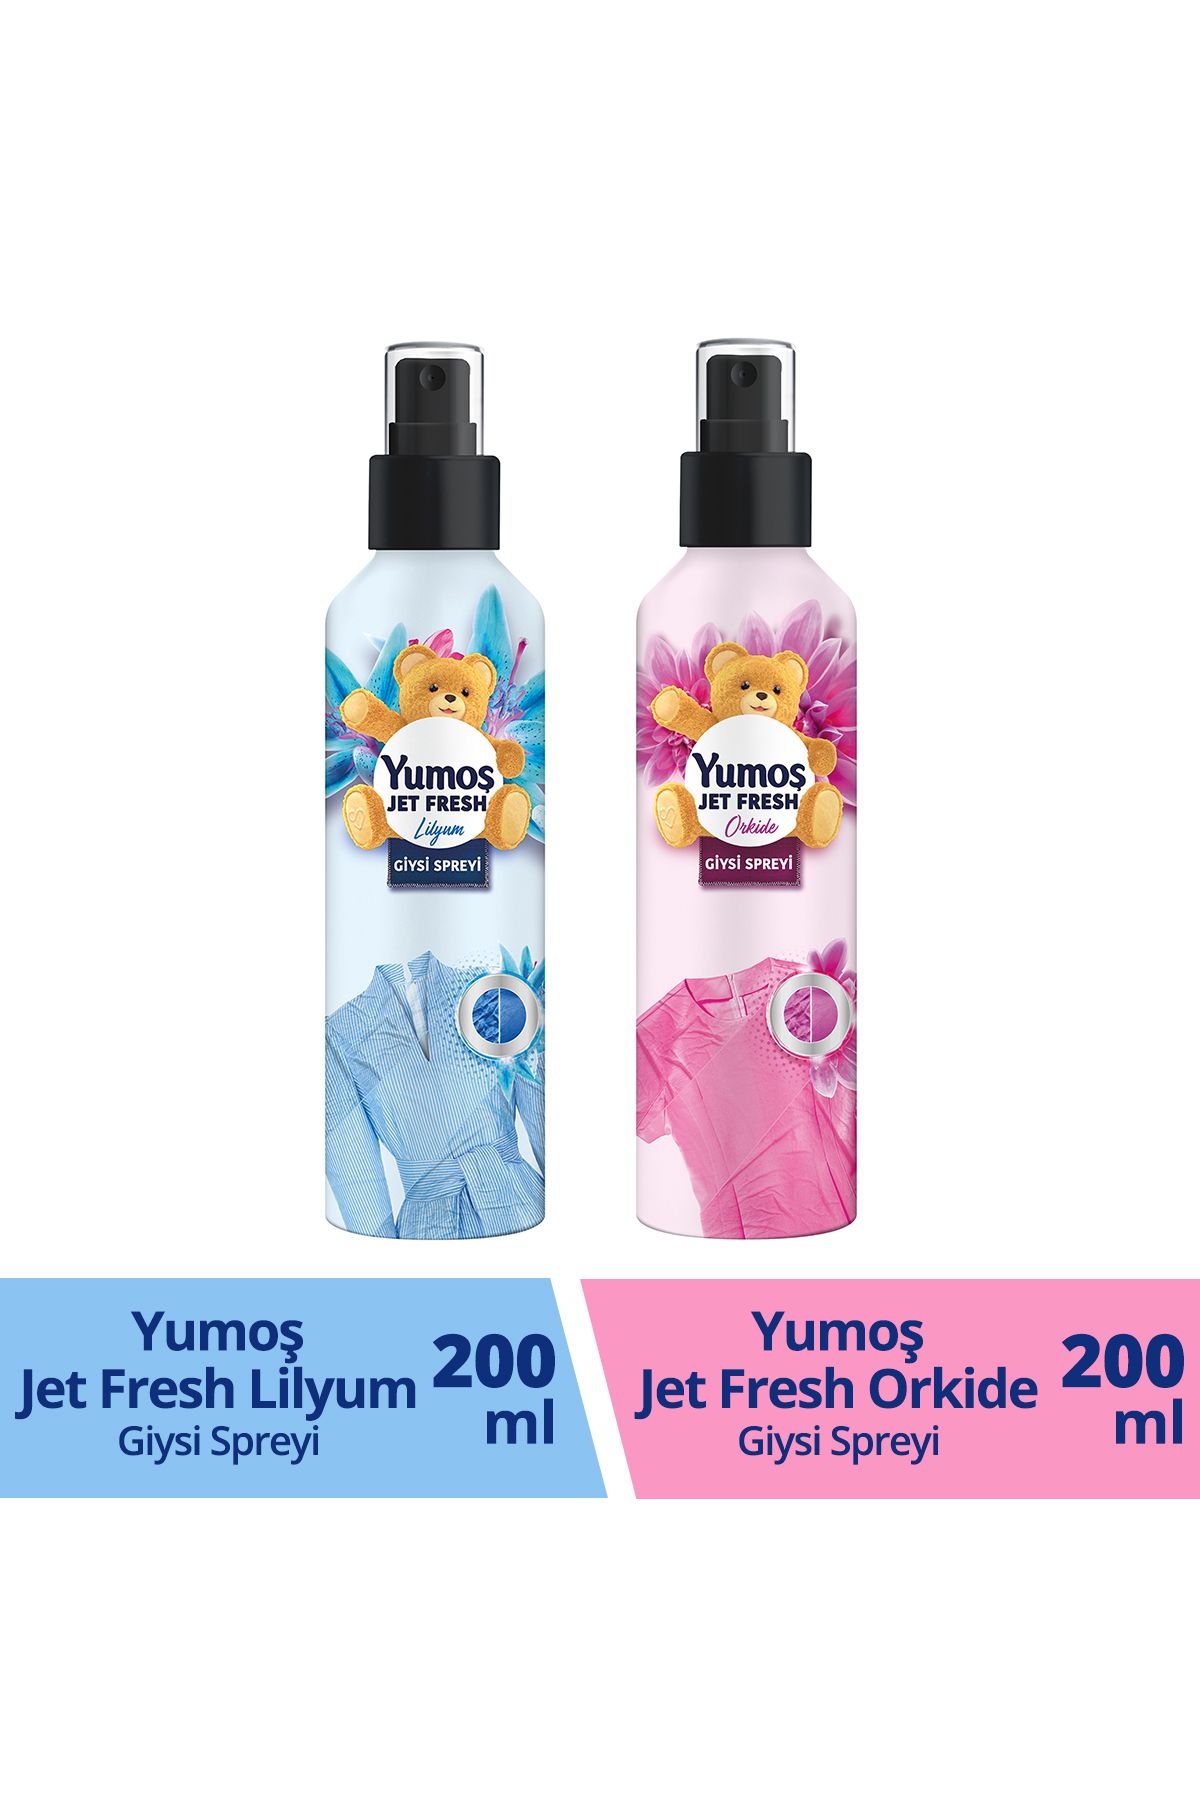 Yumoş Jet Fresh Giysi Spreyi Lilyum 200 ml 1 Adet Jet Fresh Giysi Spreyi Orkide 200 ml 1 Adet